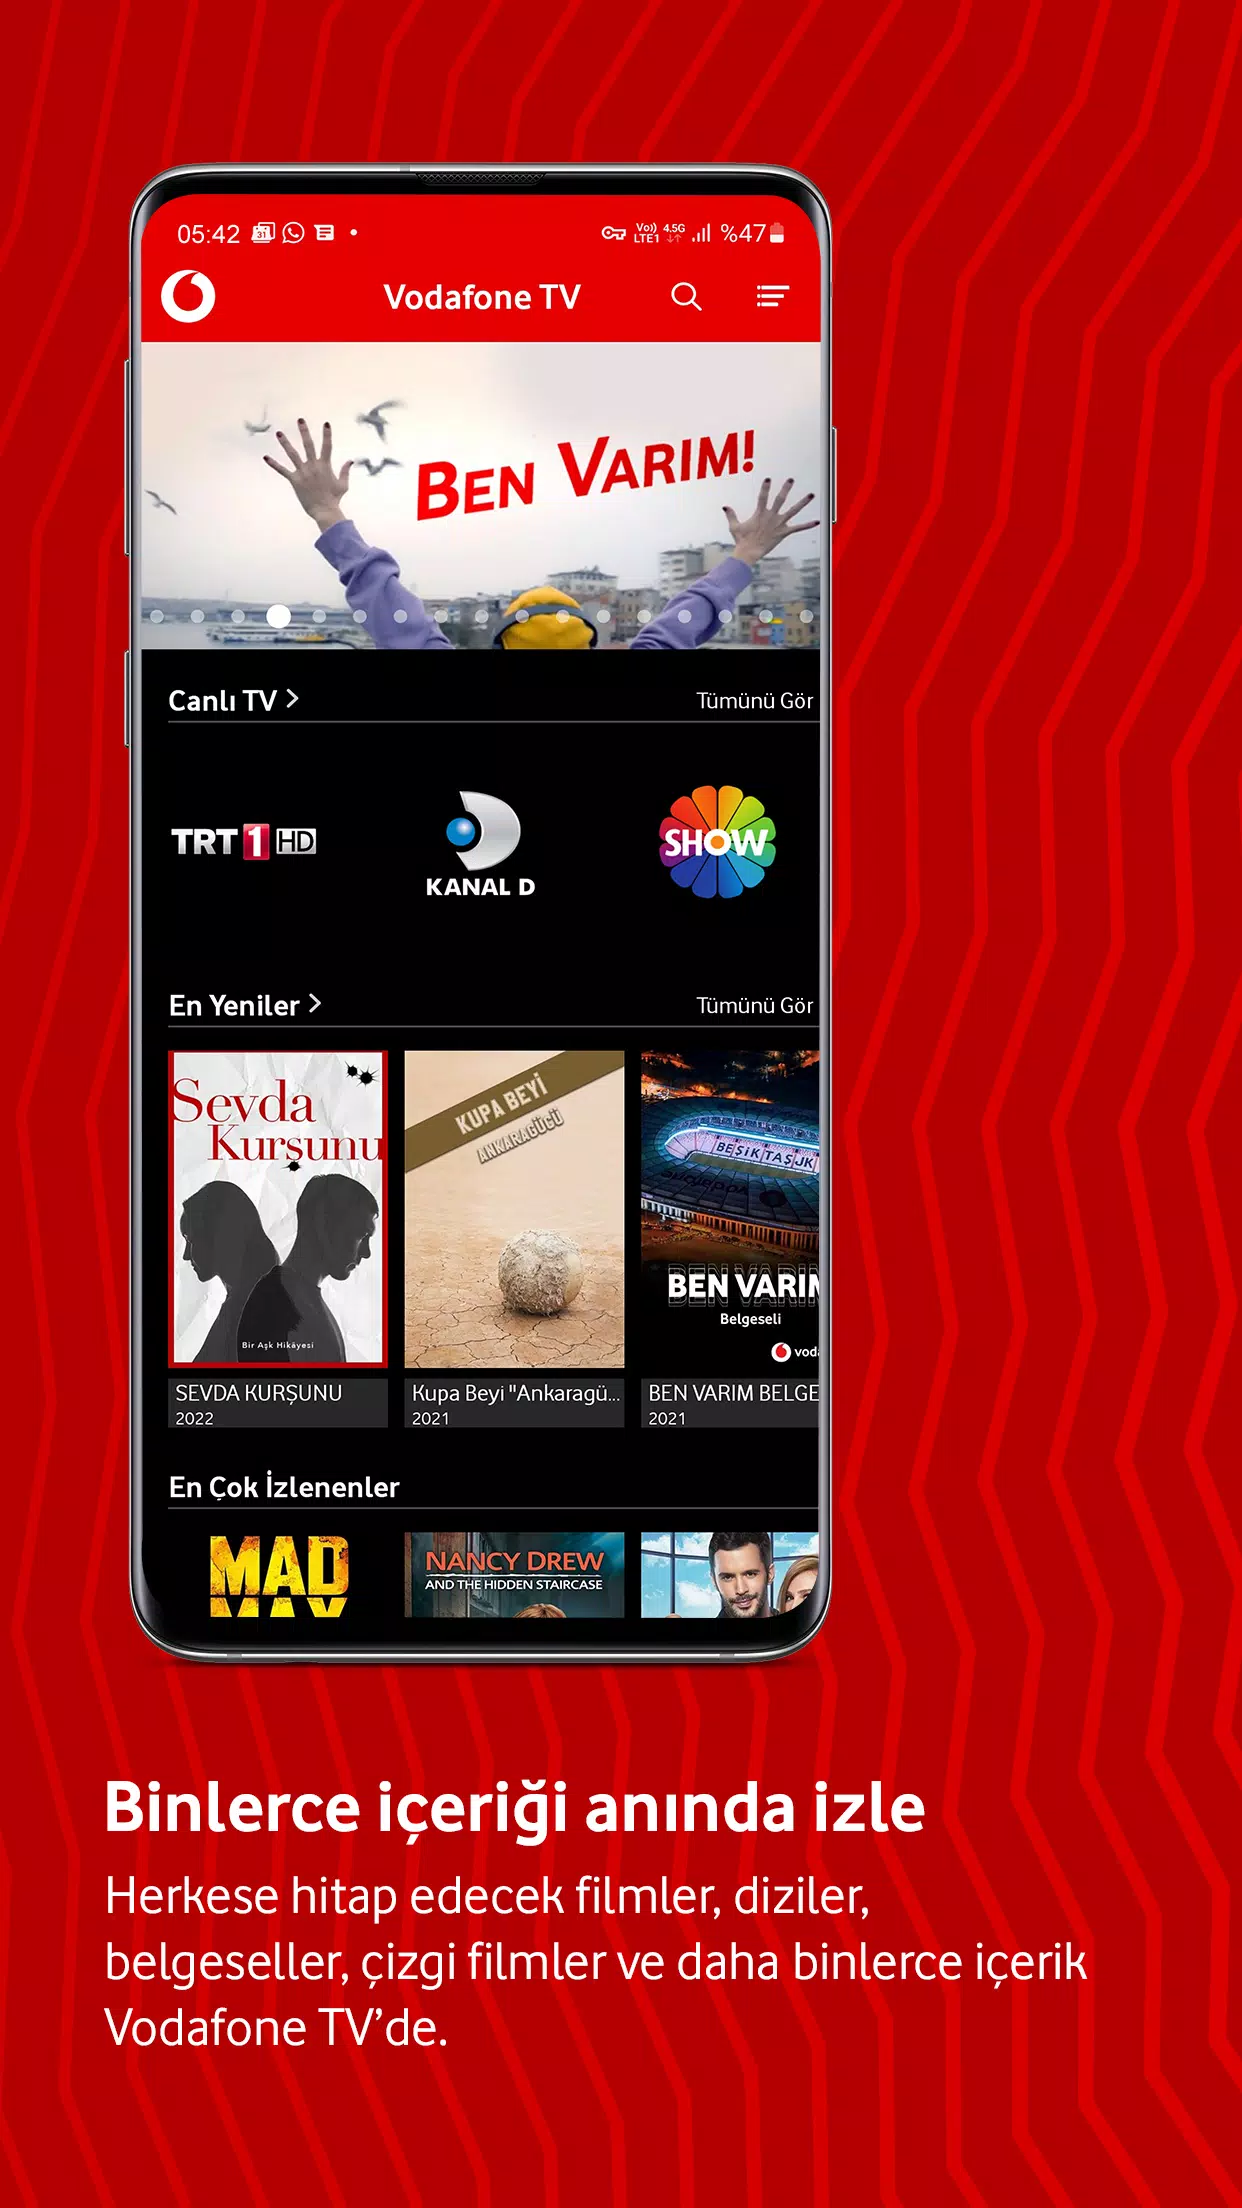 Download do APK de Vodafone TV para Android